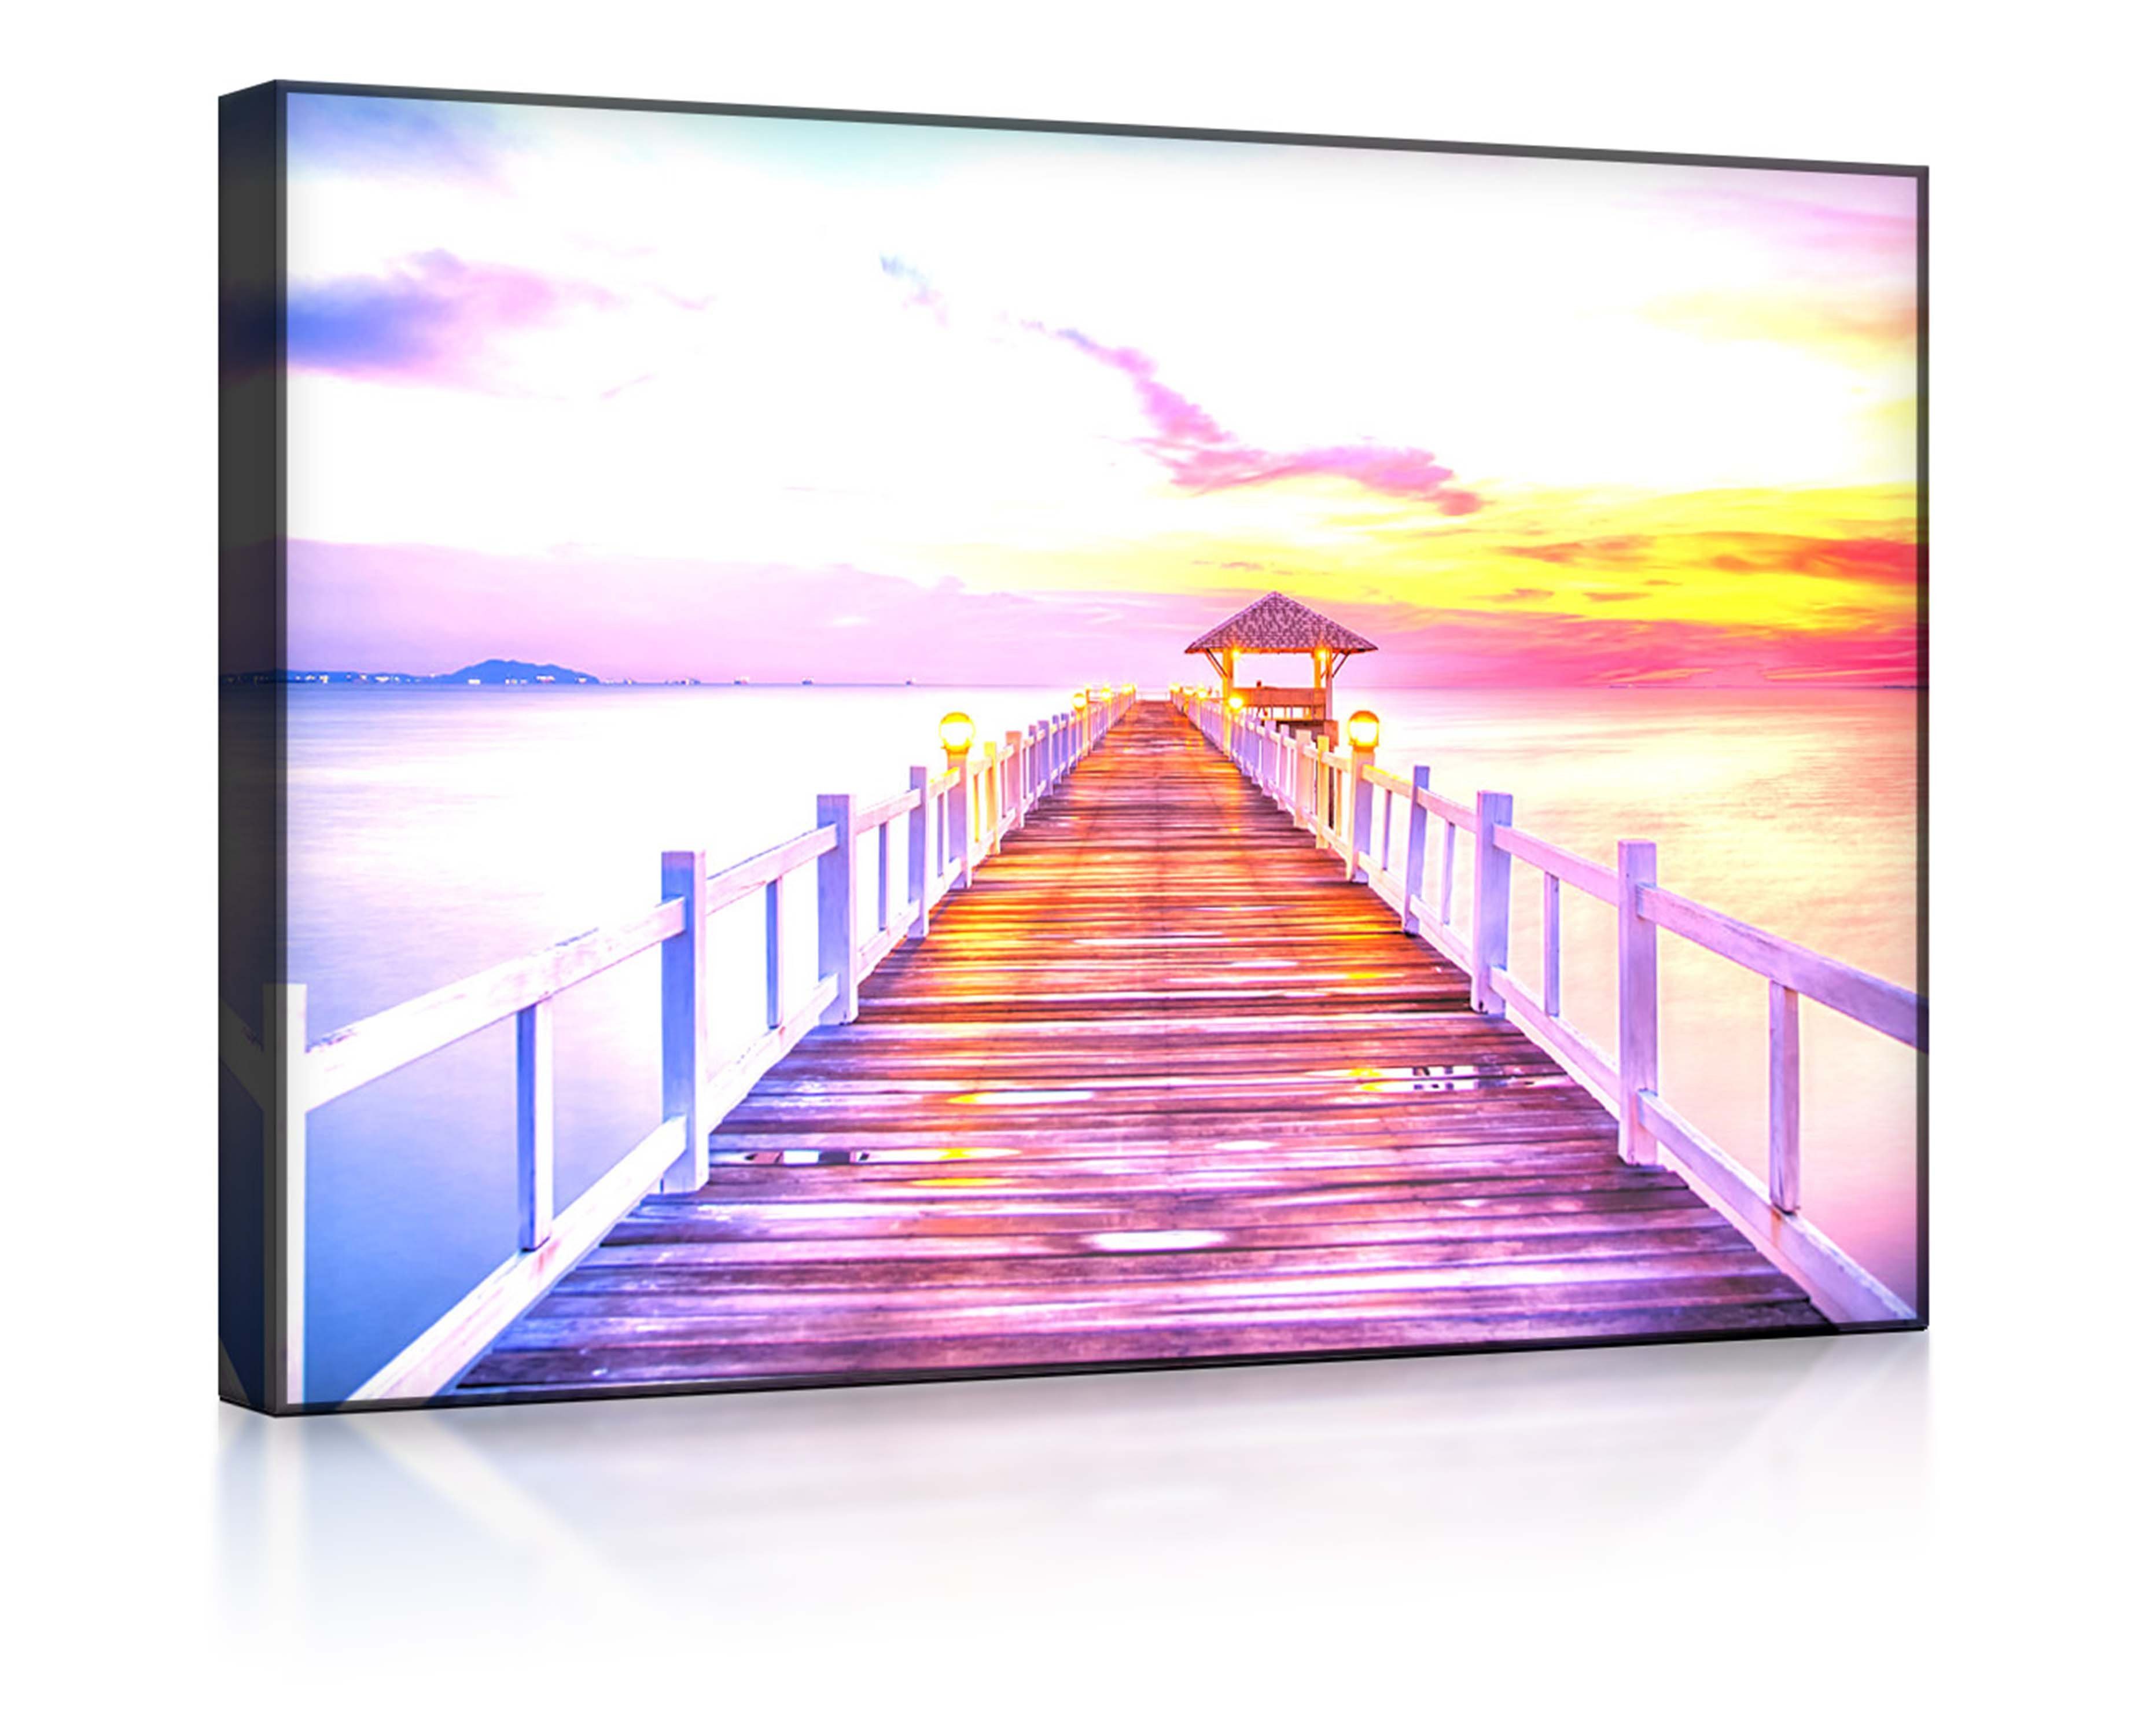 lightbox-multicolor LED-Bild Steg ins Meer bei Sonnenuntergang front lighted / 80x60cm, Leuchtbild mit Fernbedienung